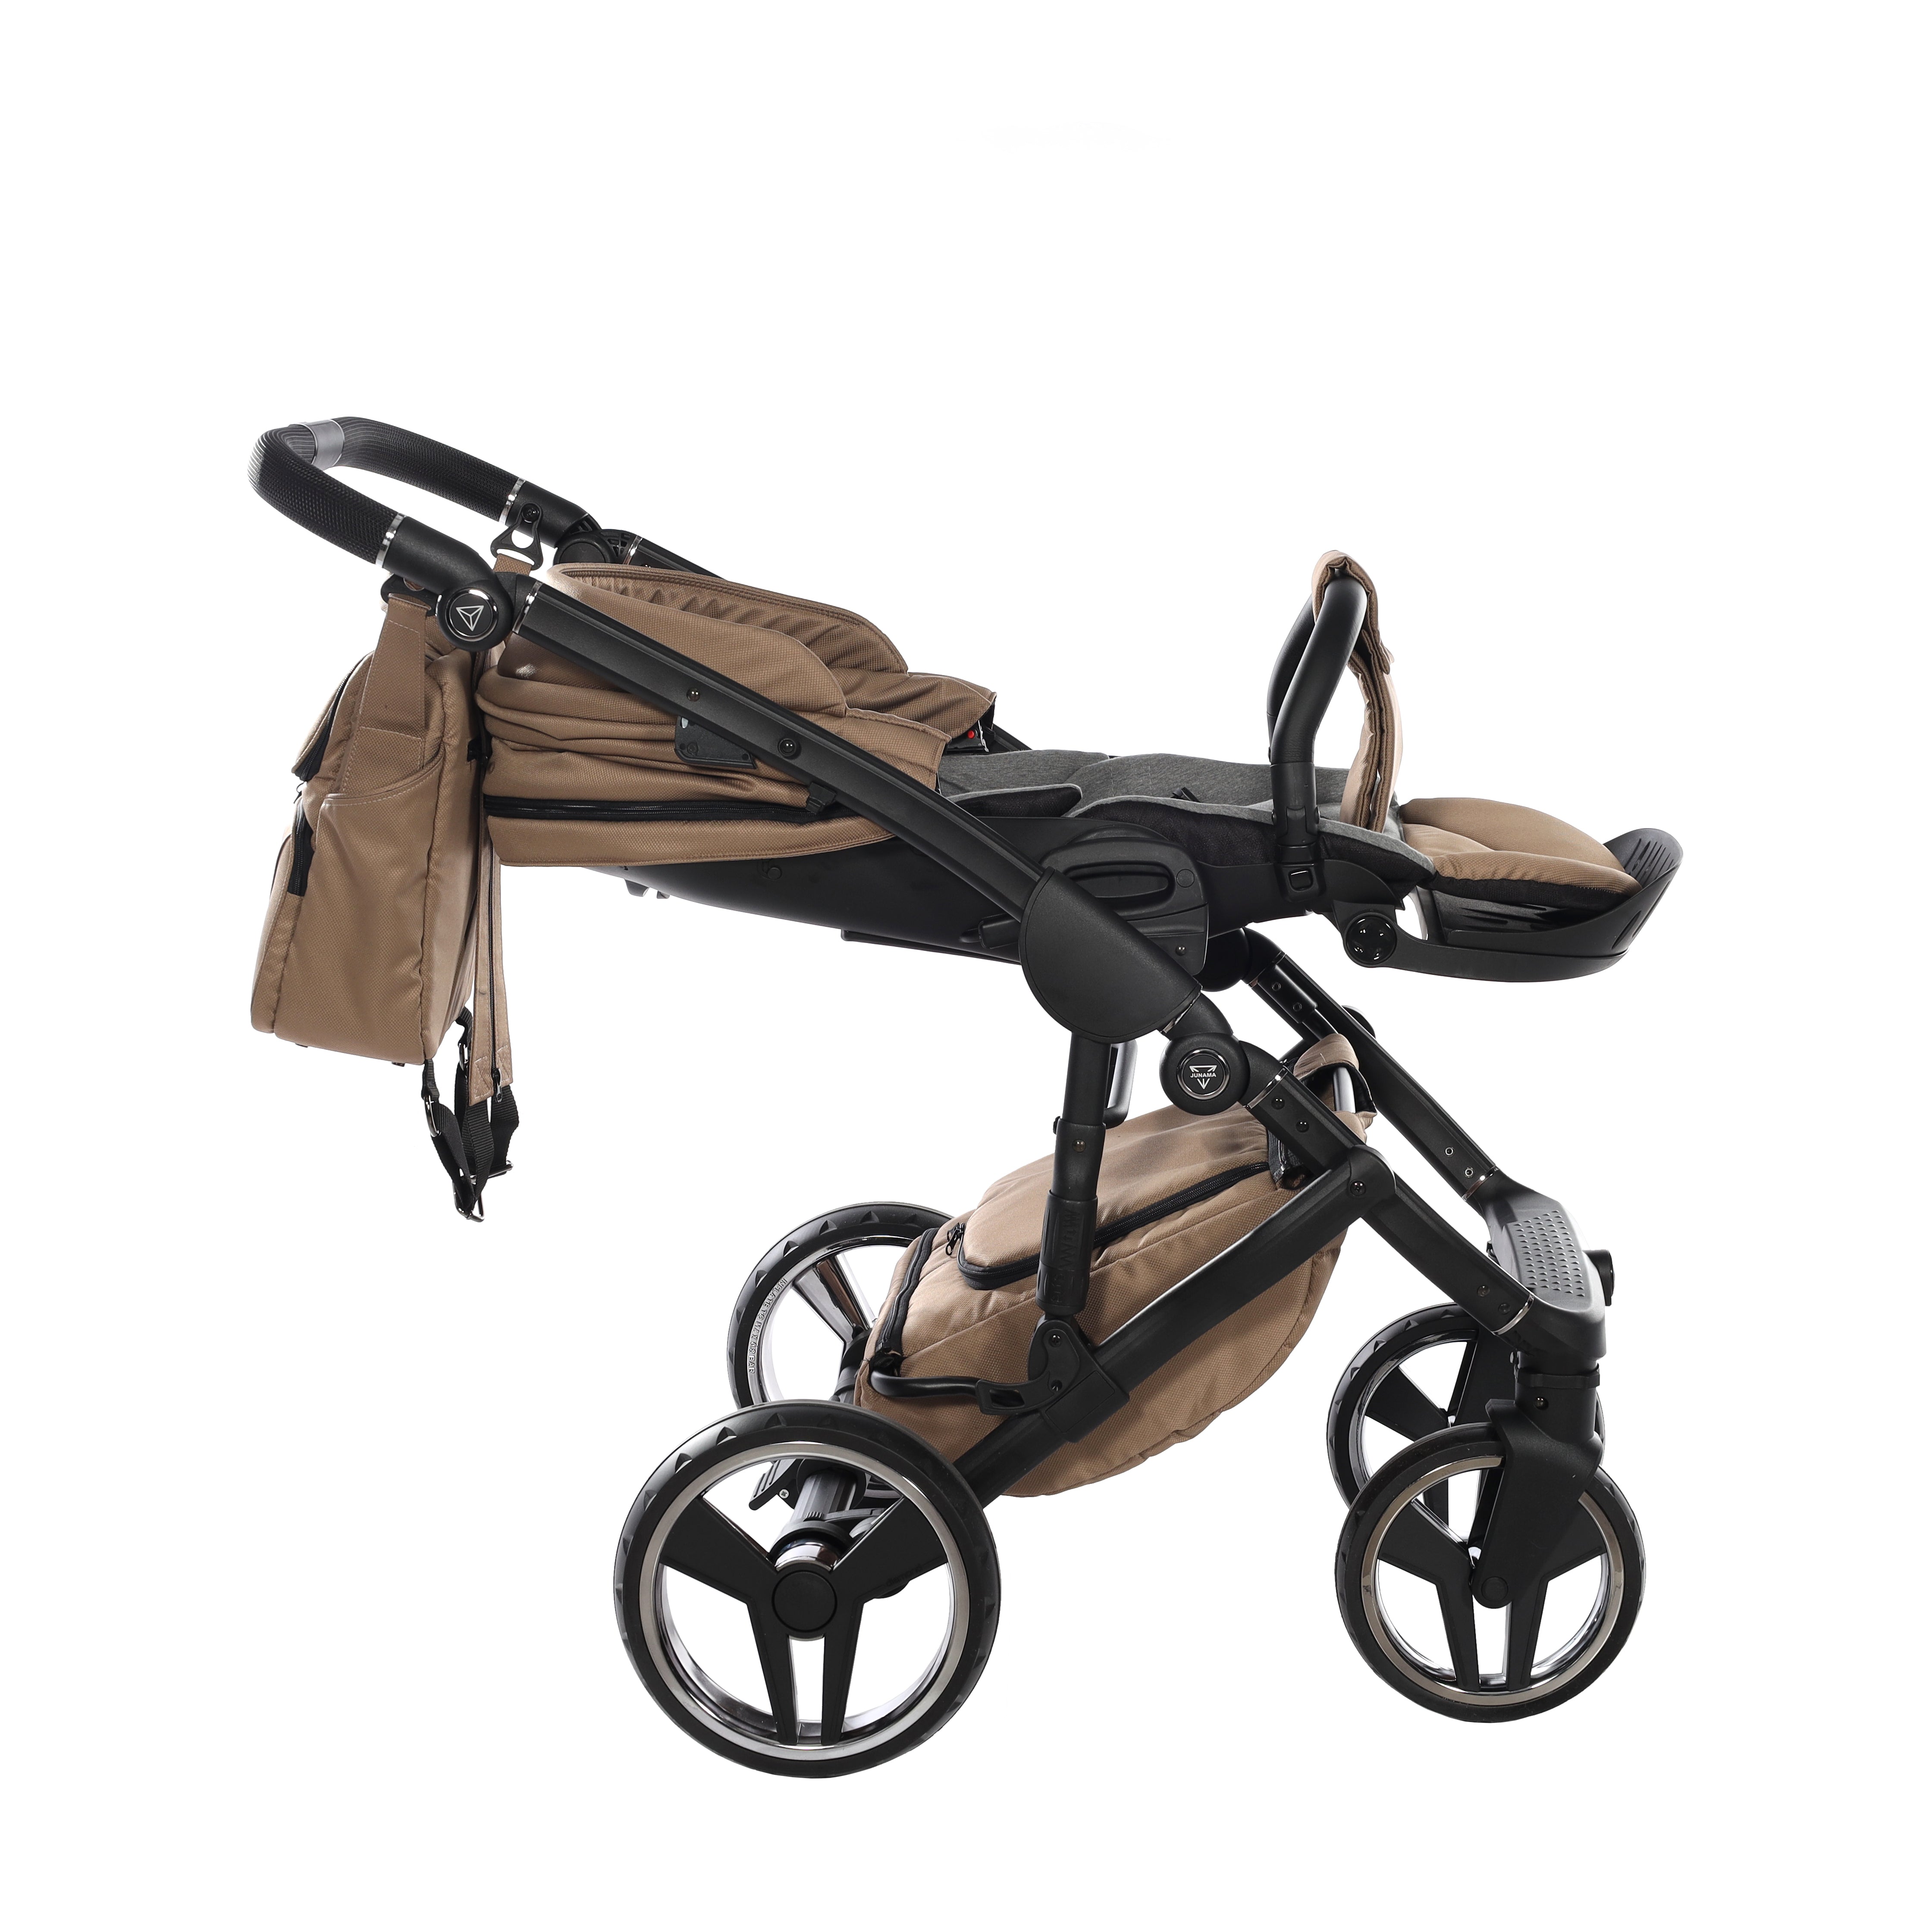 Junama BASIC, baby stroller and bassinet 2 in 1 - BEIGE, Code number: JUNBSC04